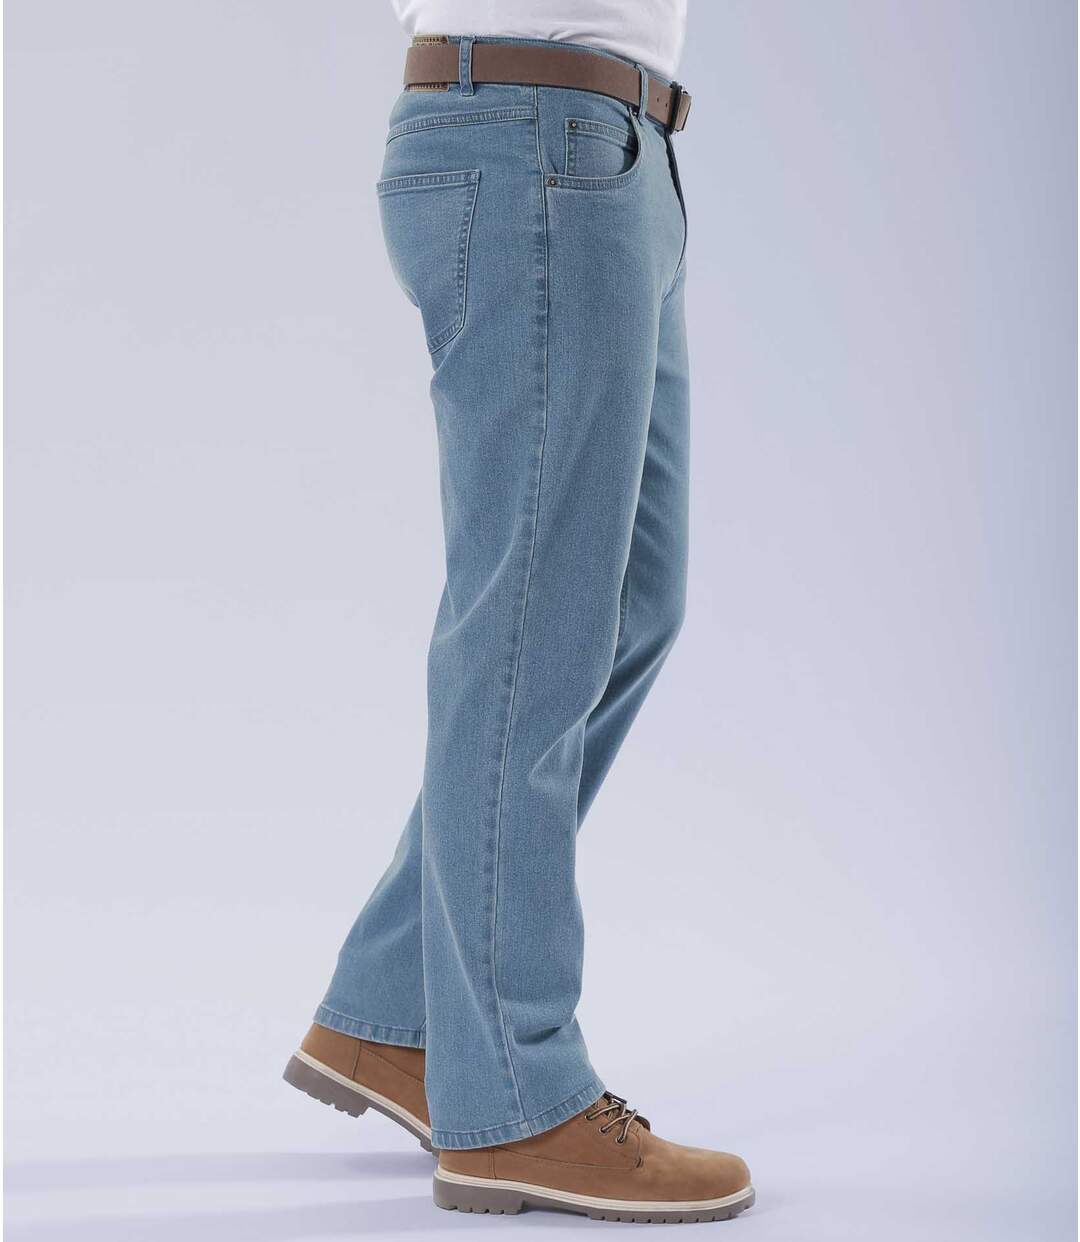 Modré strečové džínsy Regular Atlas For Men